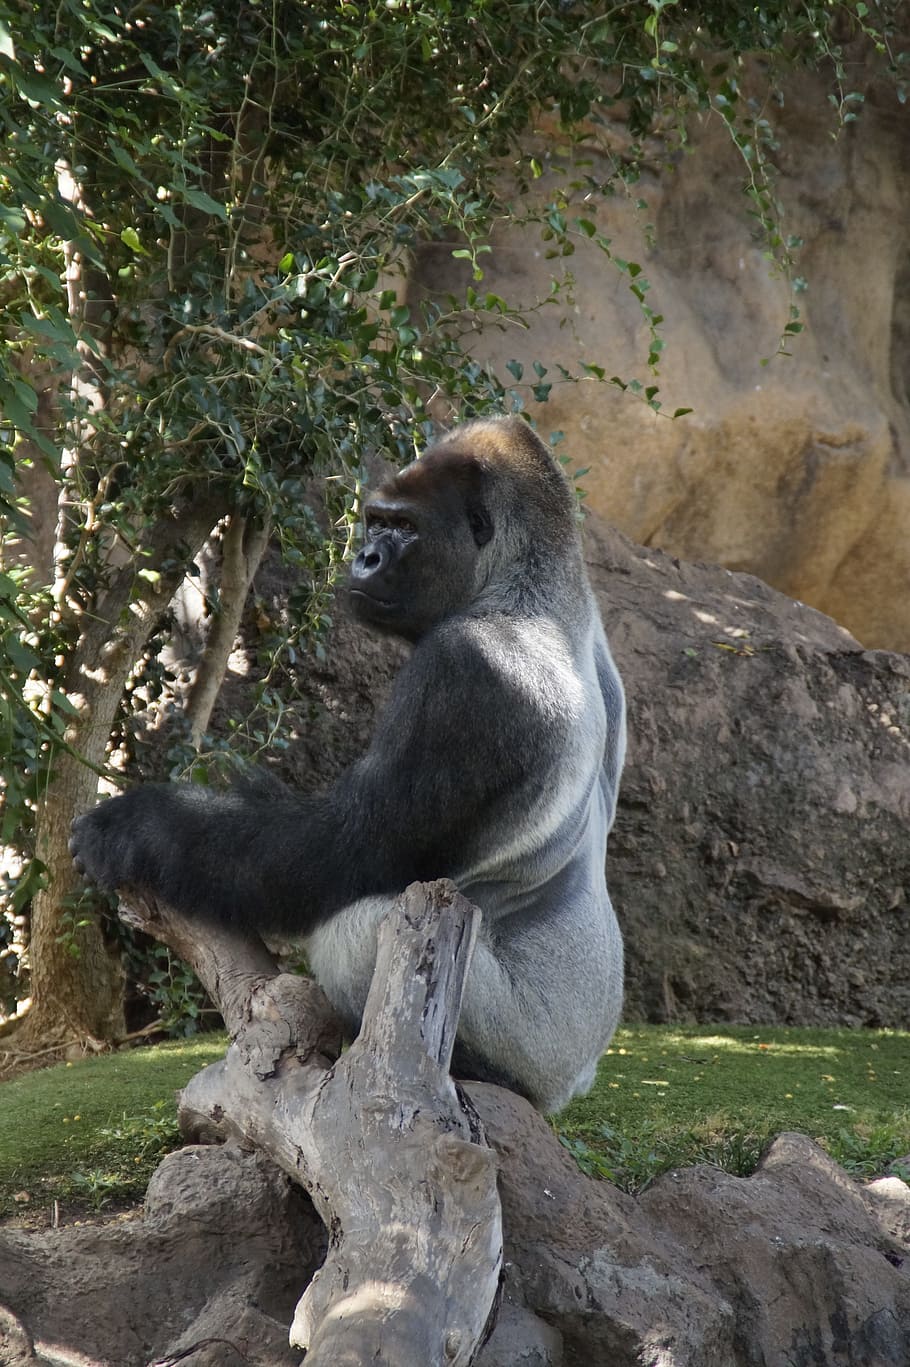 Gorilla, Male, Monkey, males, a male gorilla, pose, poznan, silverback, leader, animal